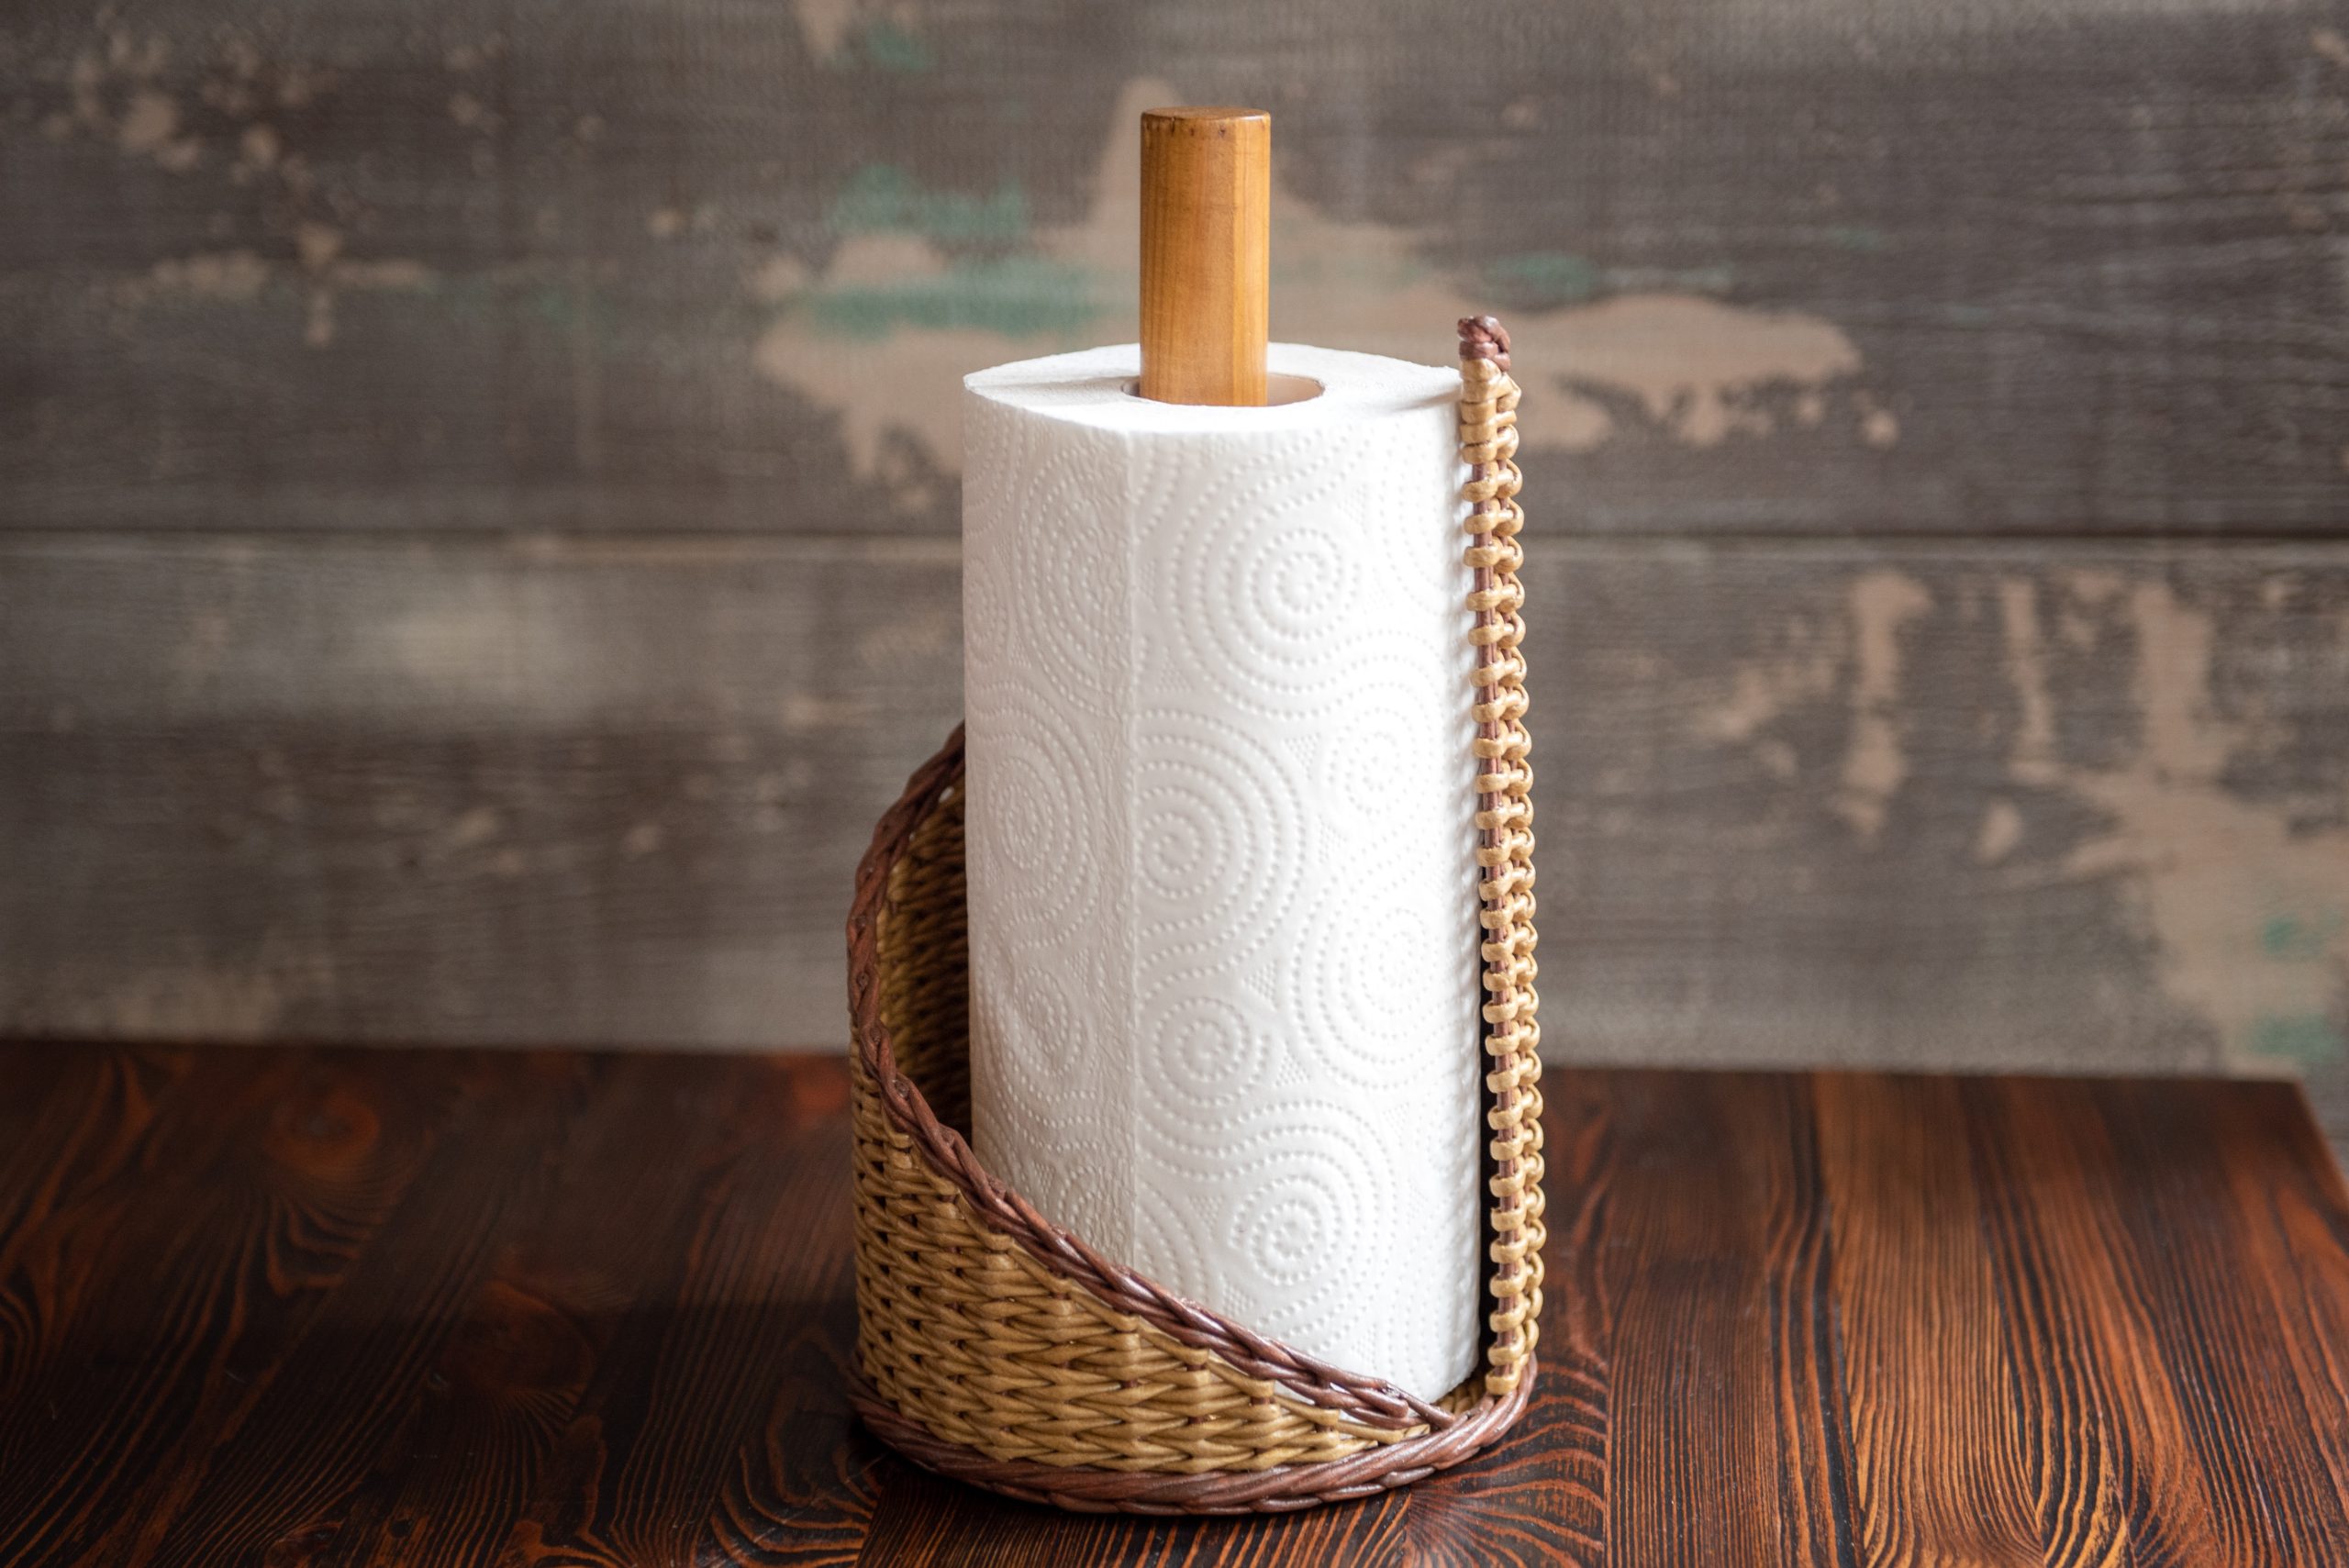 Rustic Paper Towel Holder counter Top 